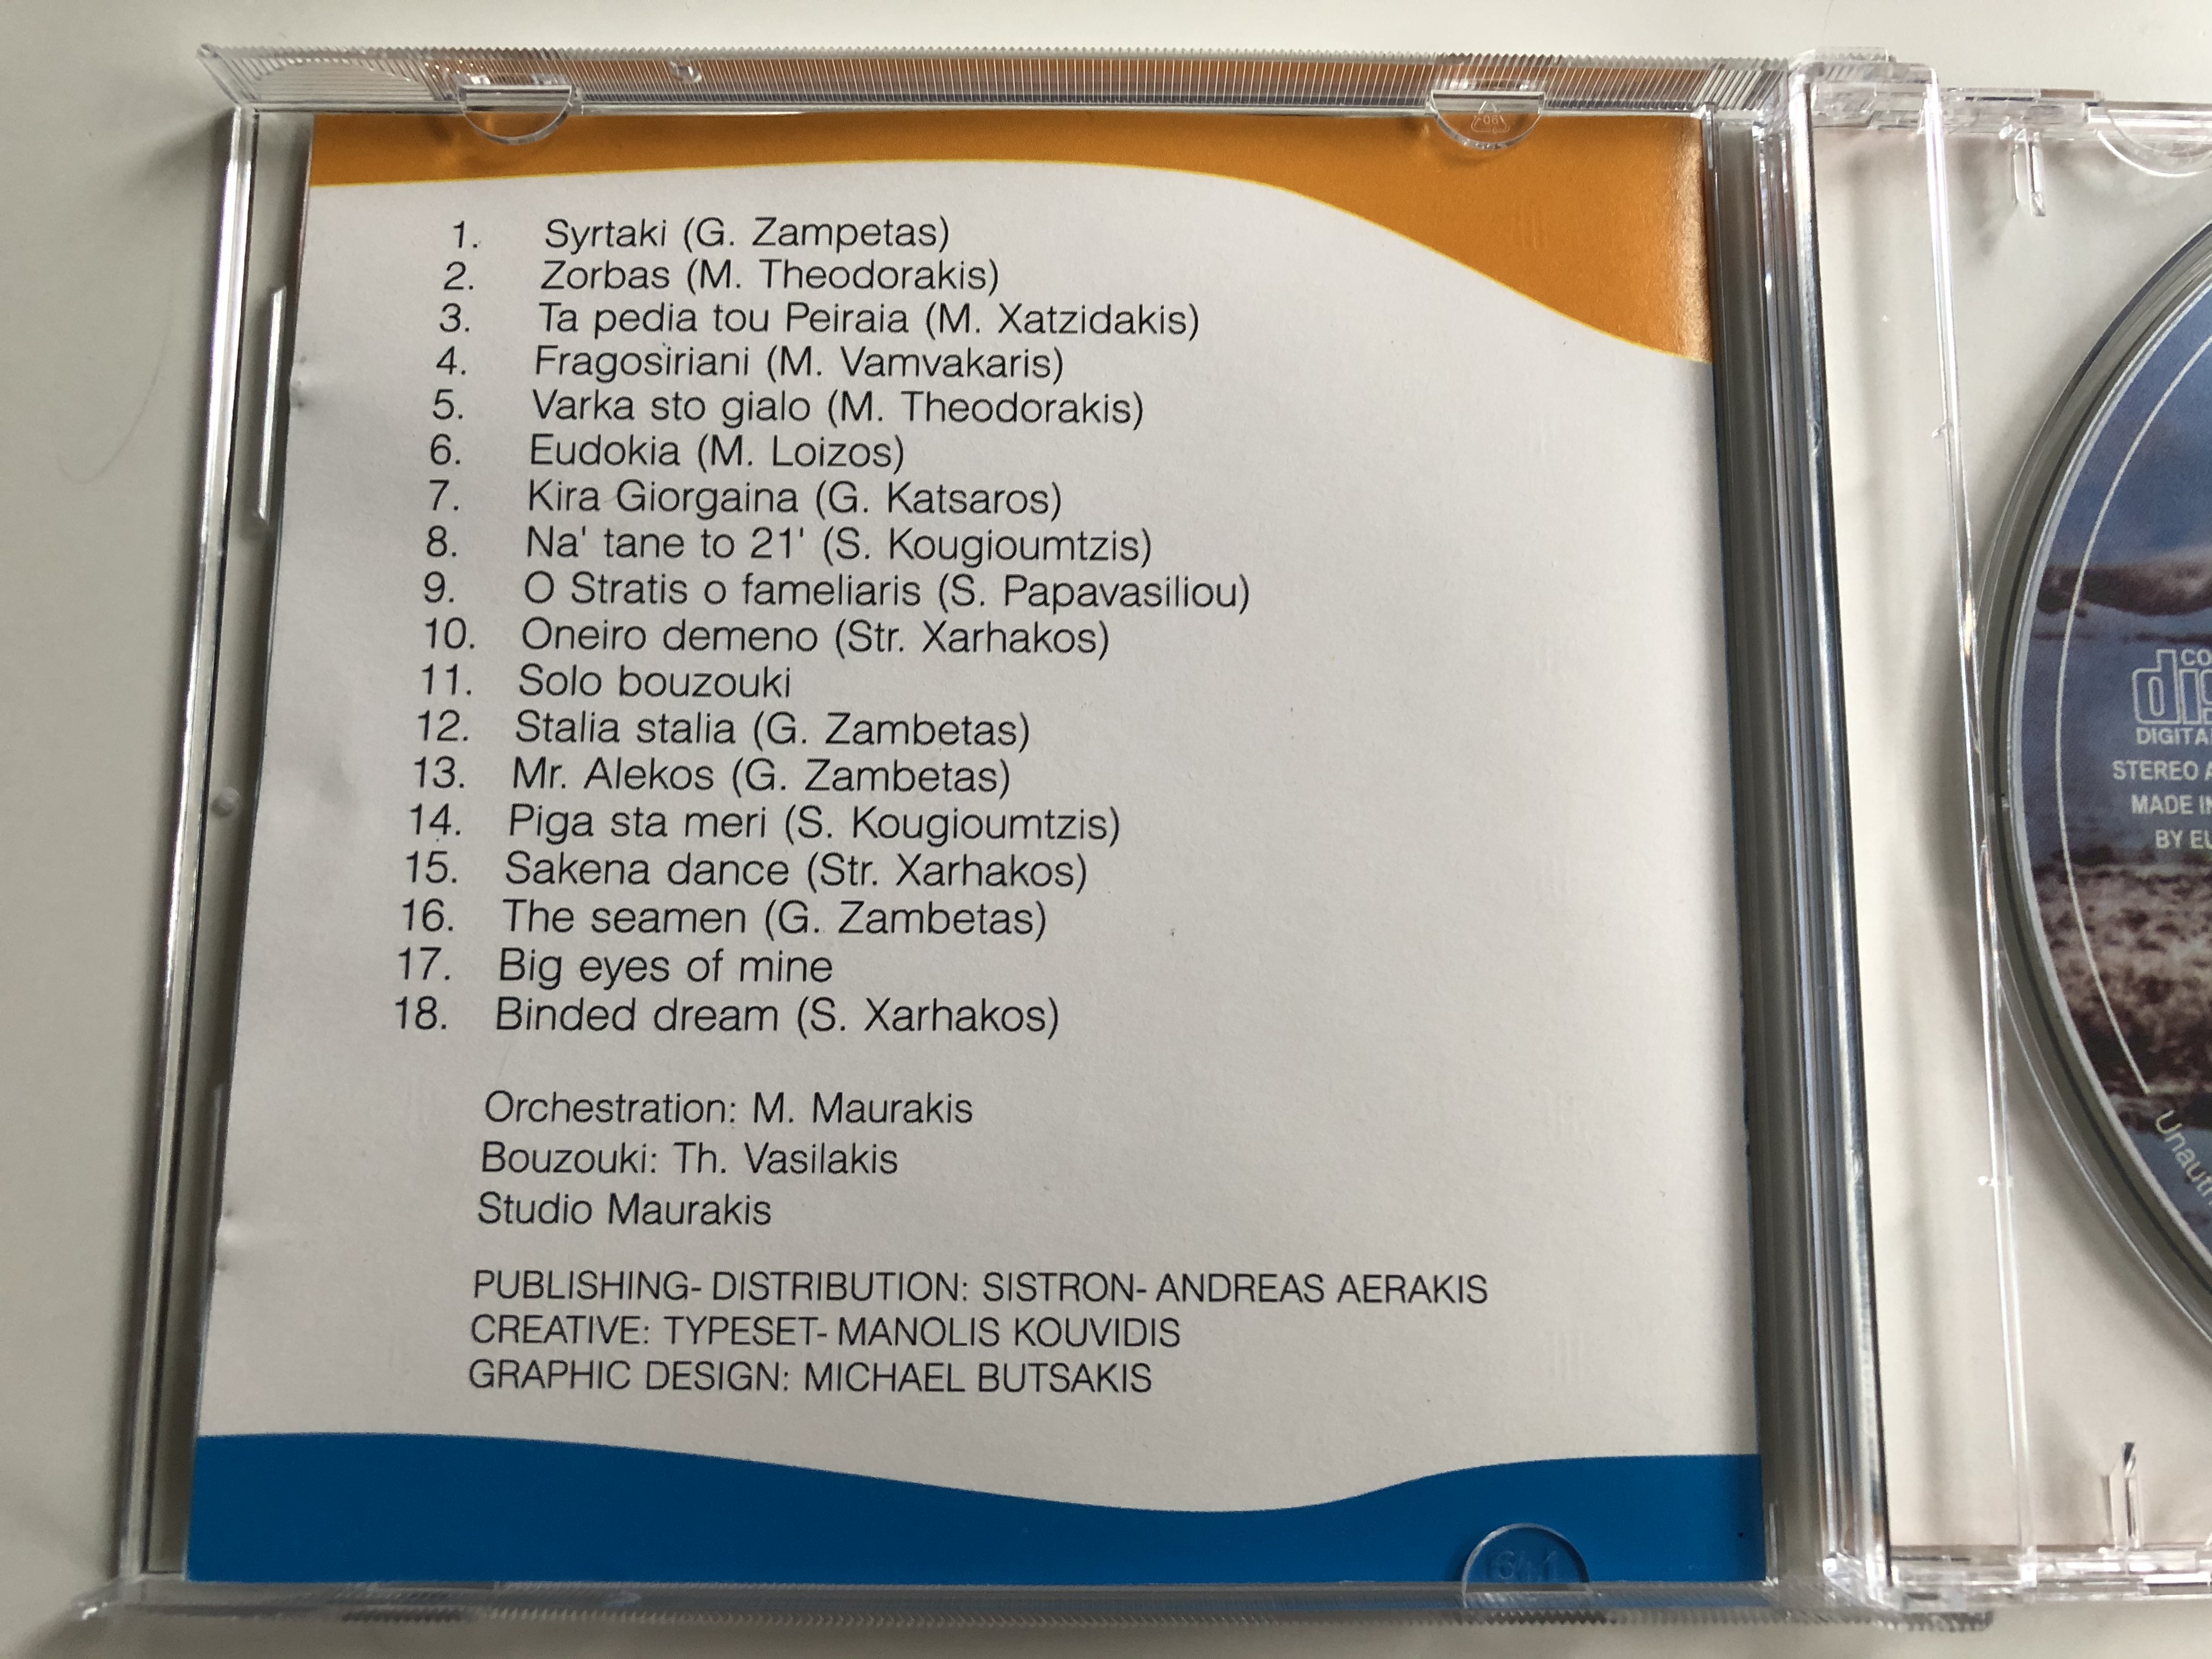 syrtaki-dance-18-instrumentals-audio-cd-2004-stereo-.-.-.-218-2-.jpg